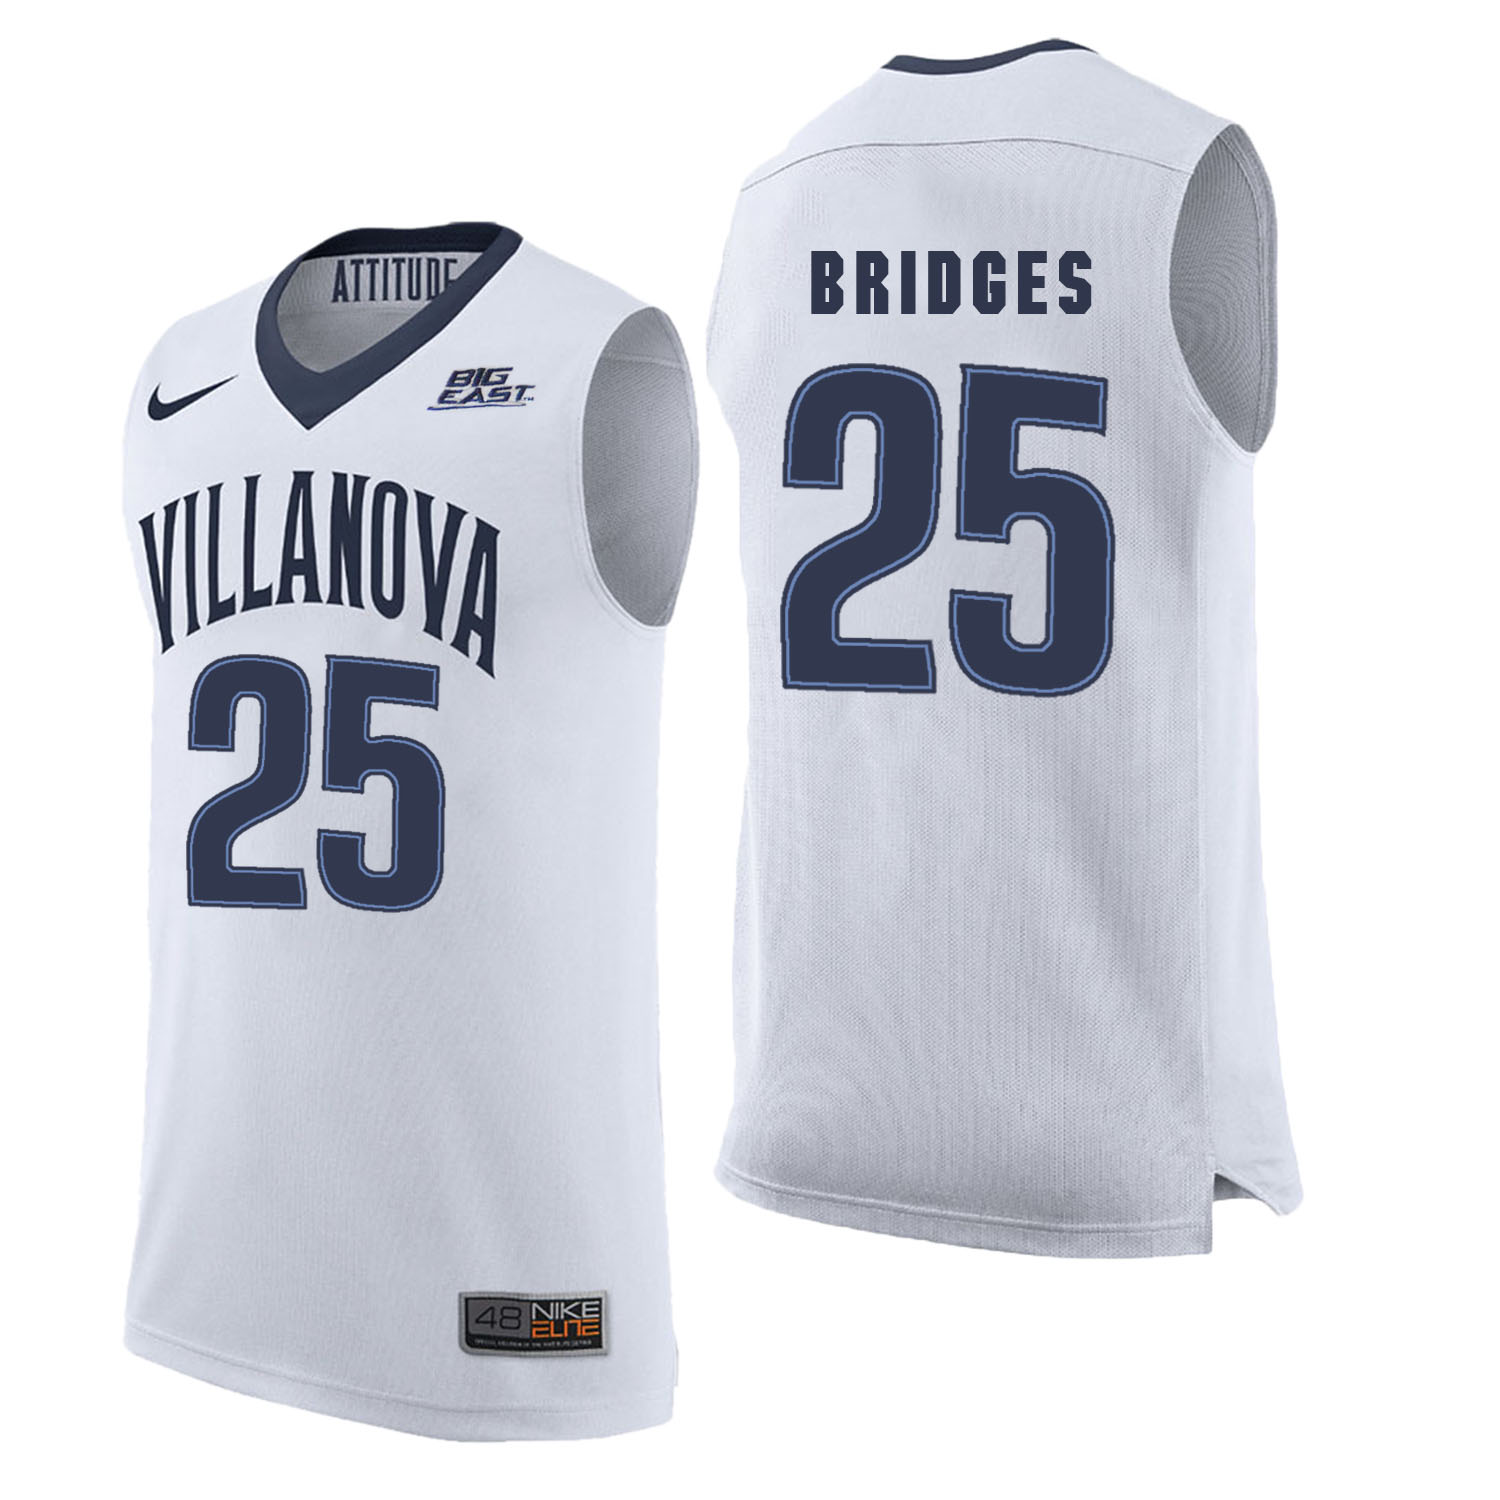 Villanova Wildcats 25 Mikal Bridges White College Basketball Elite Jersey